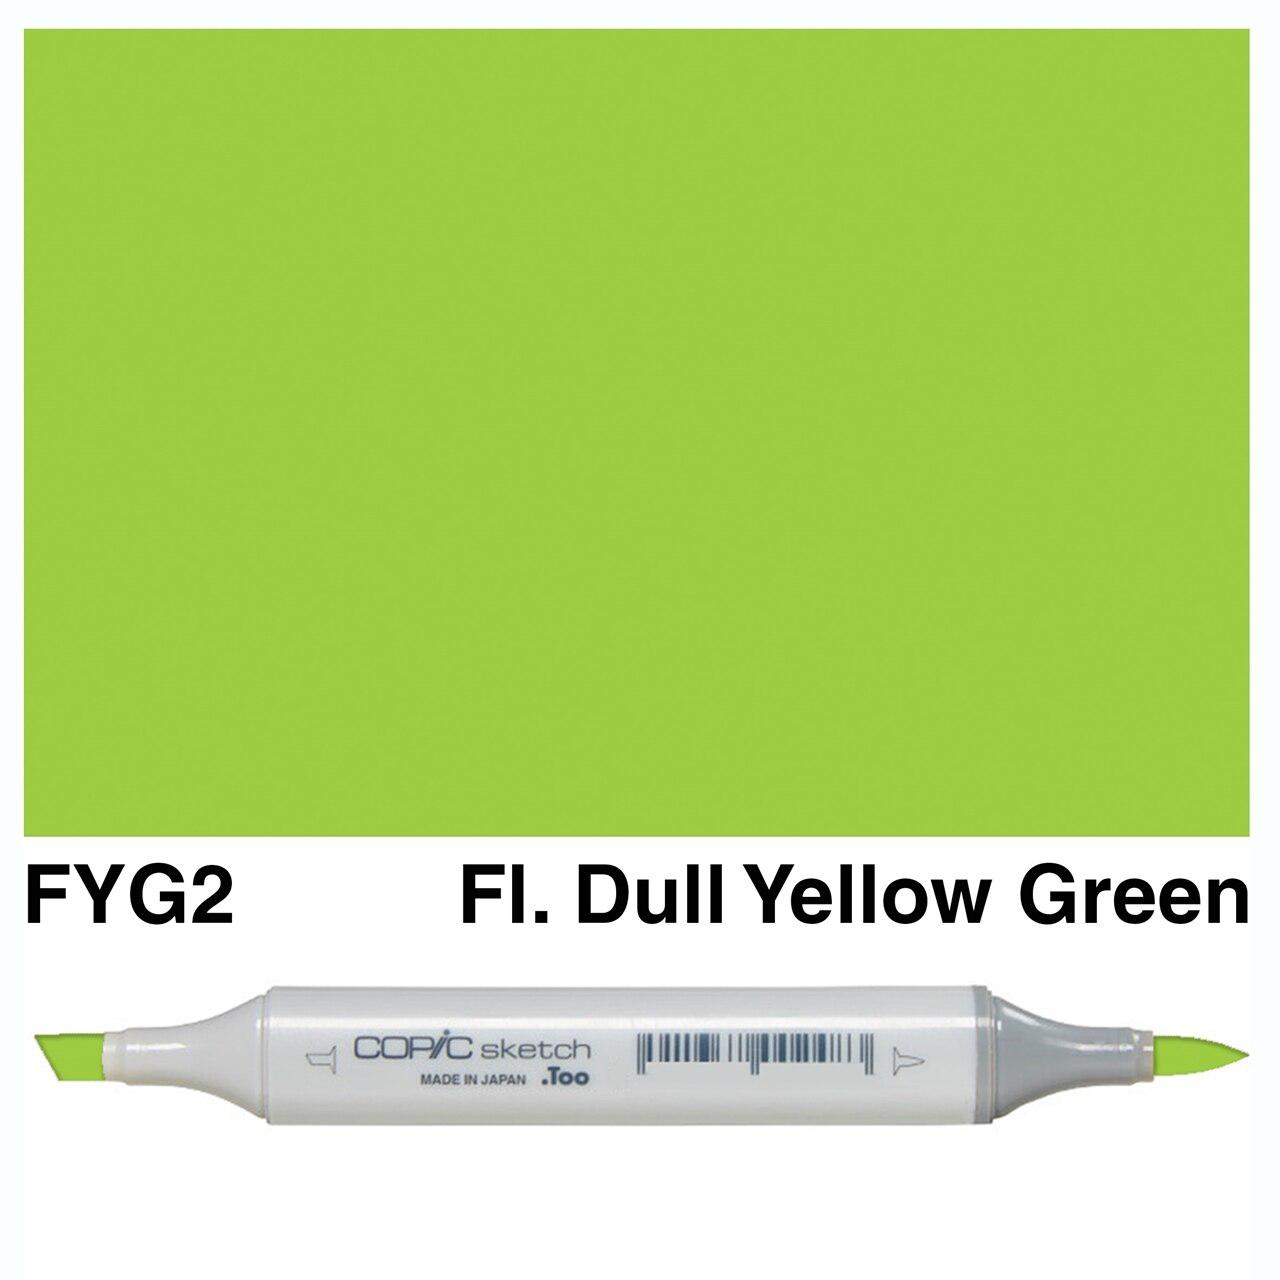 Copic - Sketch Marker - Fluorescent Green - FG-ScrapbookPal